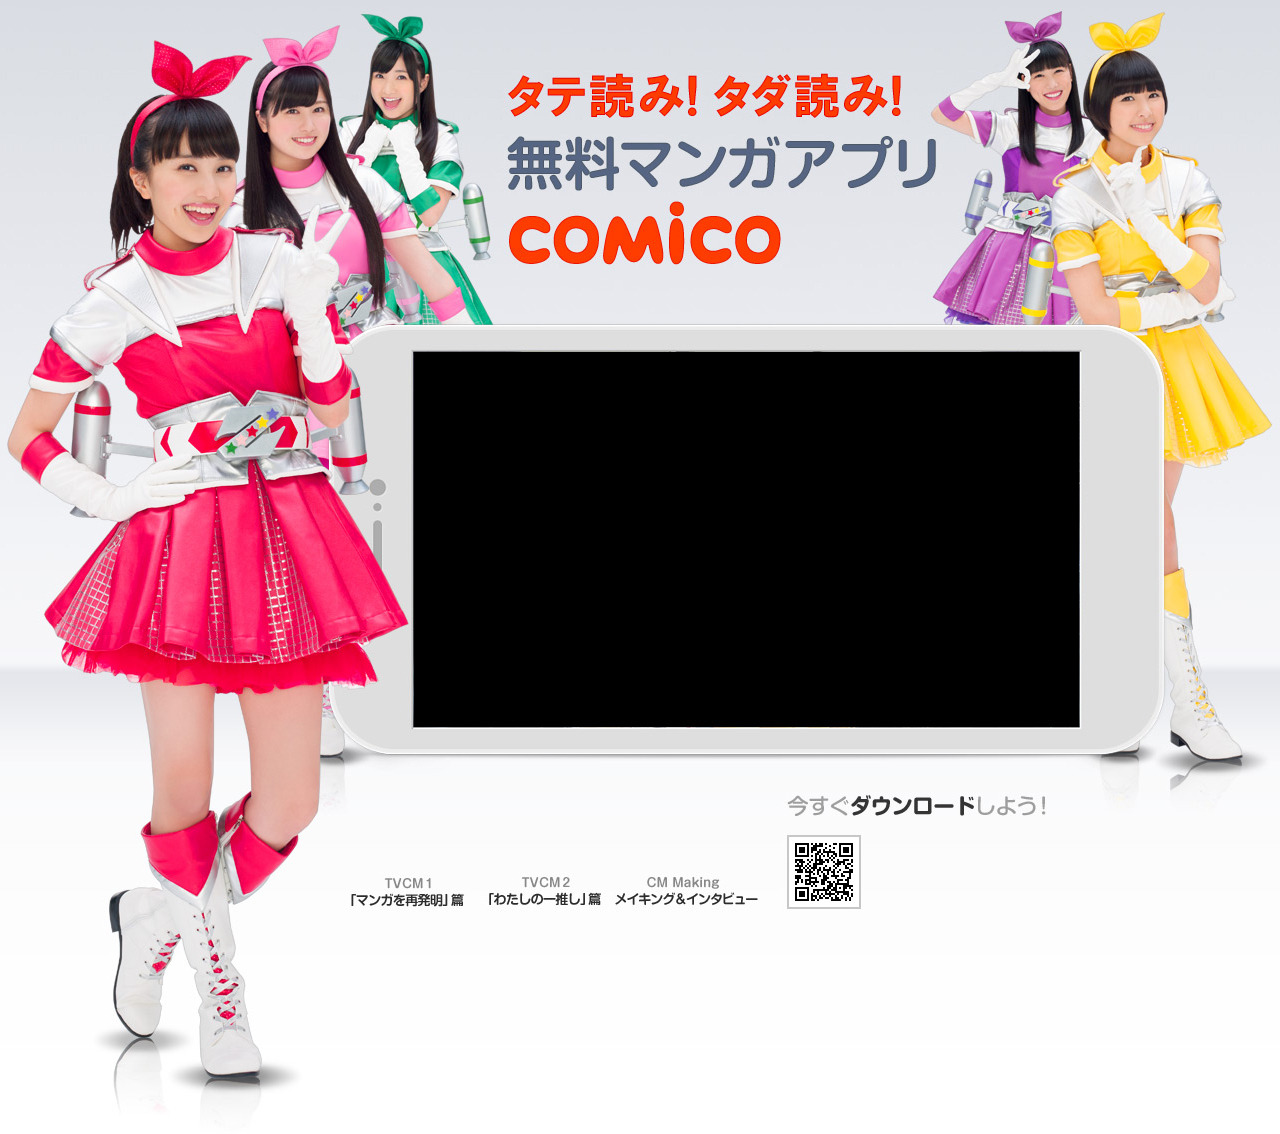 Mcz ももクロ Comico テレビcm特設サイト Comico コミコ